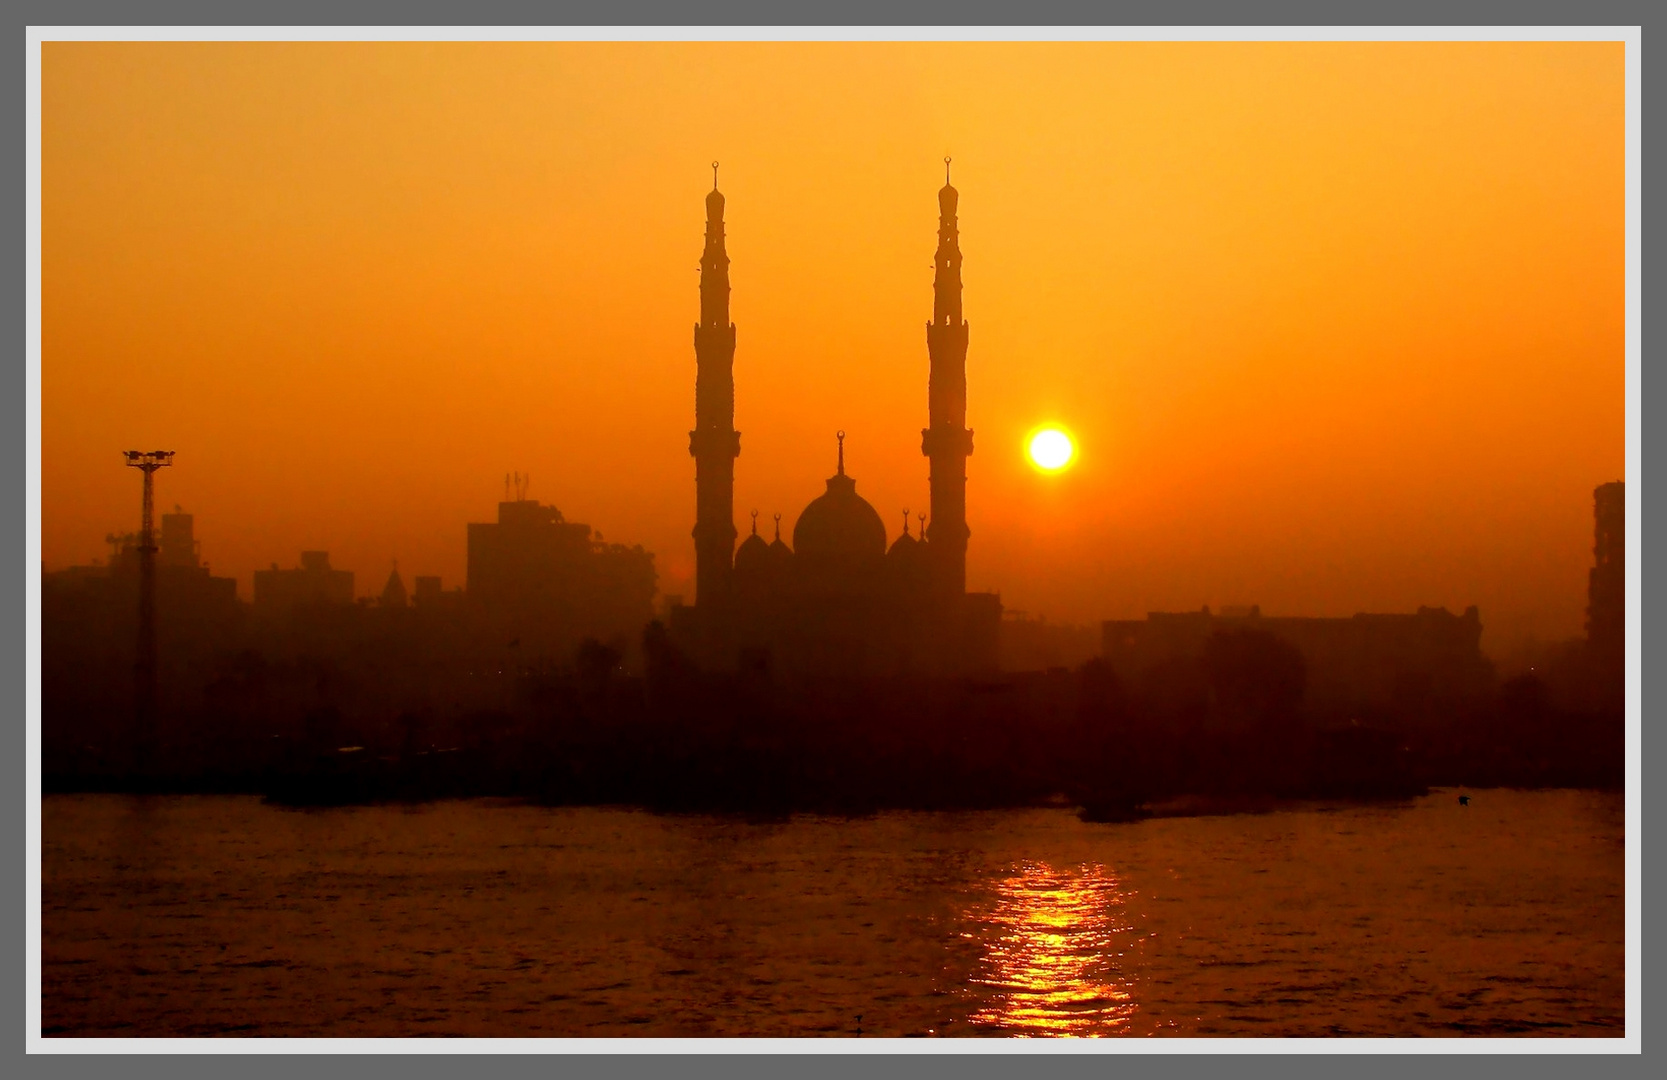 Sonnenaufgang in Port Said